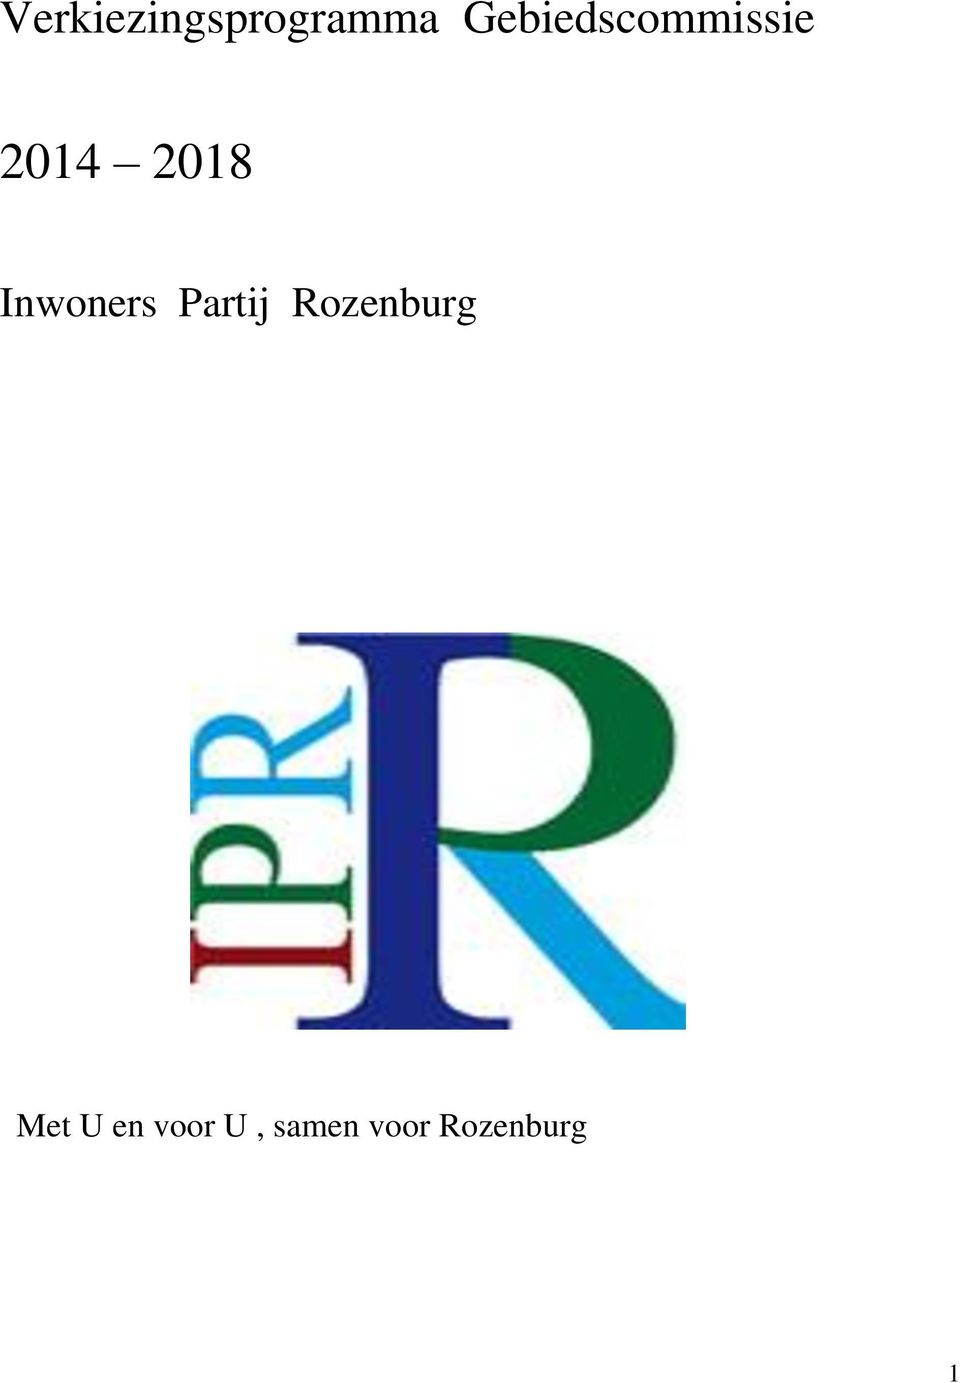 Inwoners Partij Rozenburg